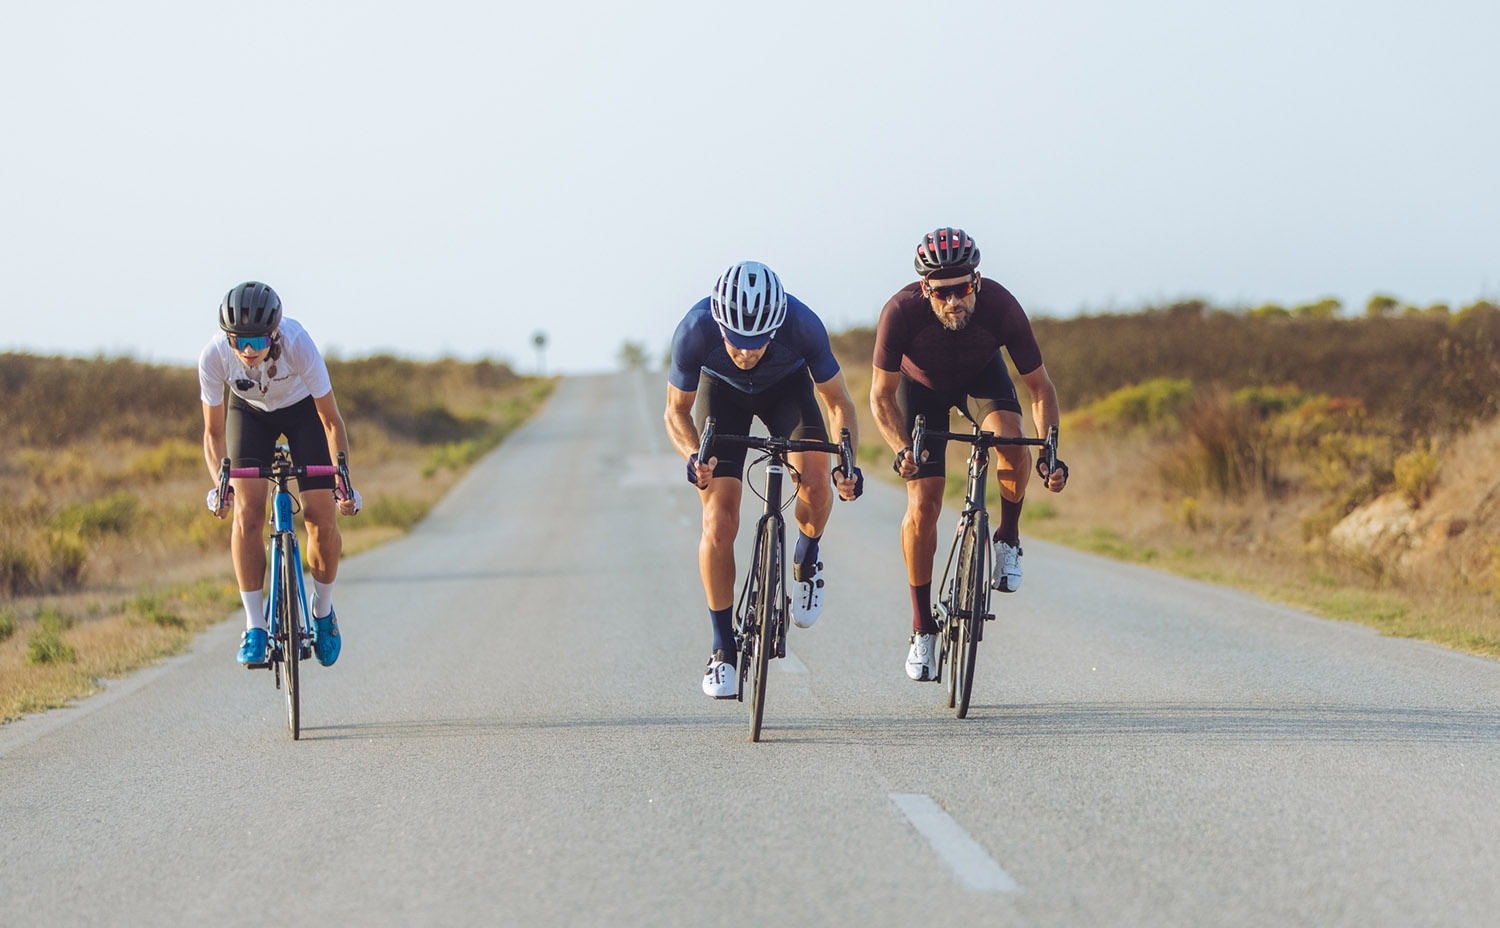 Beklædning - Cykelkasketter - GripGrab Letvægts Summer Cycling Cap - Blå